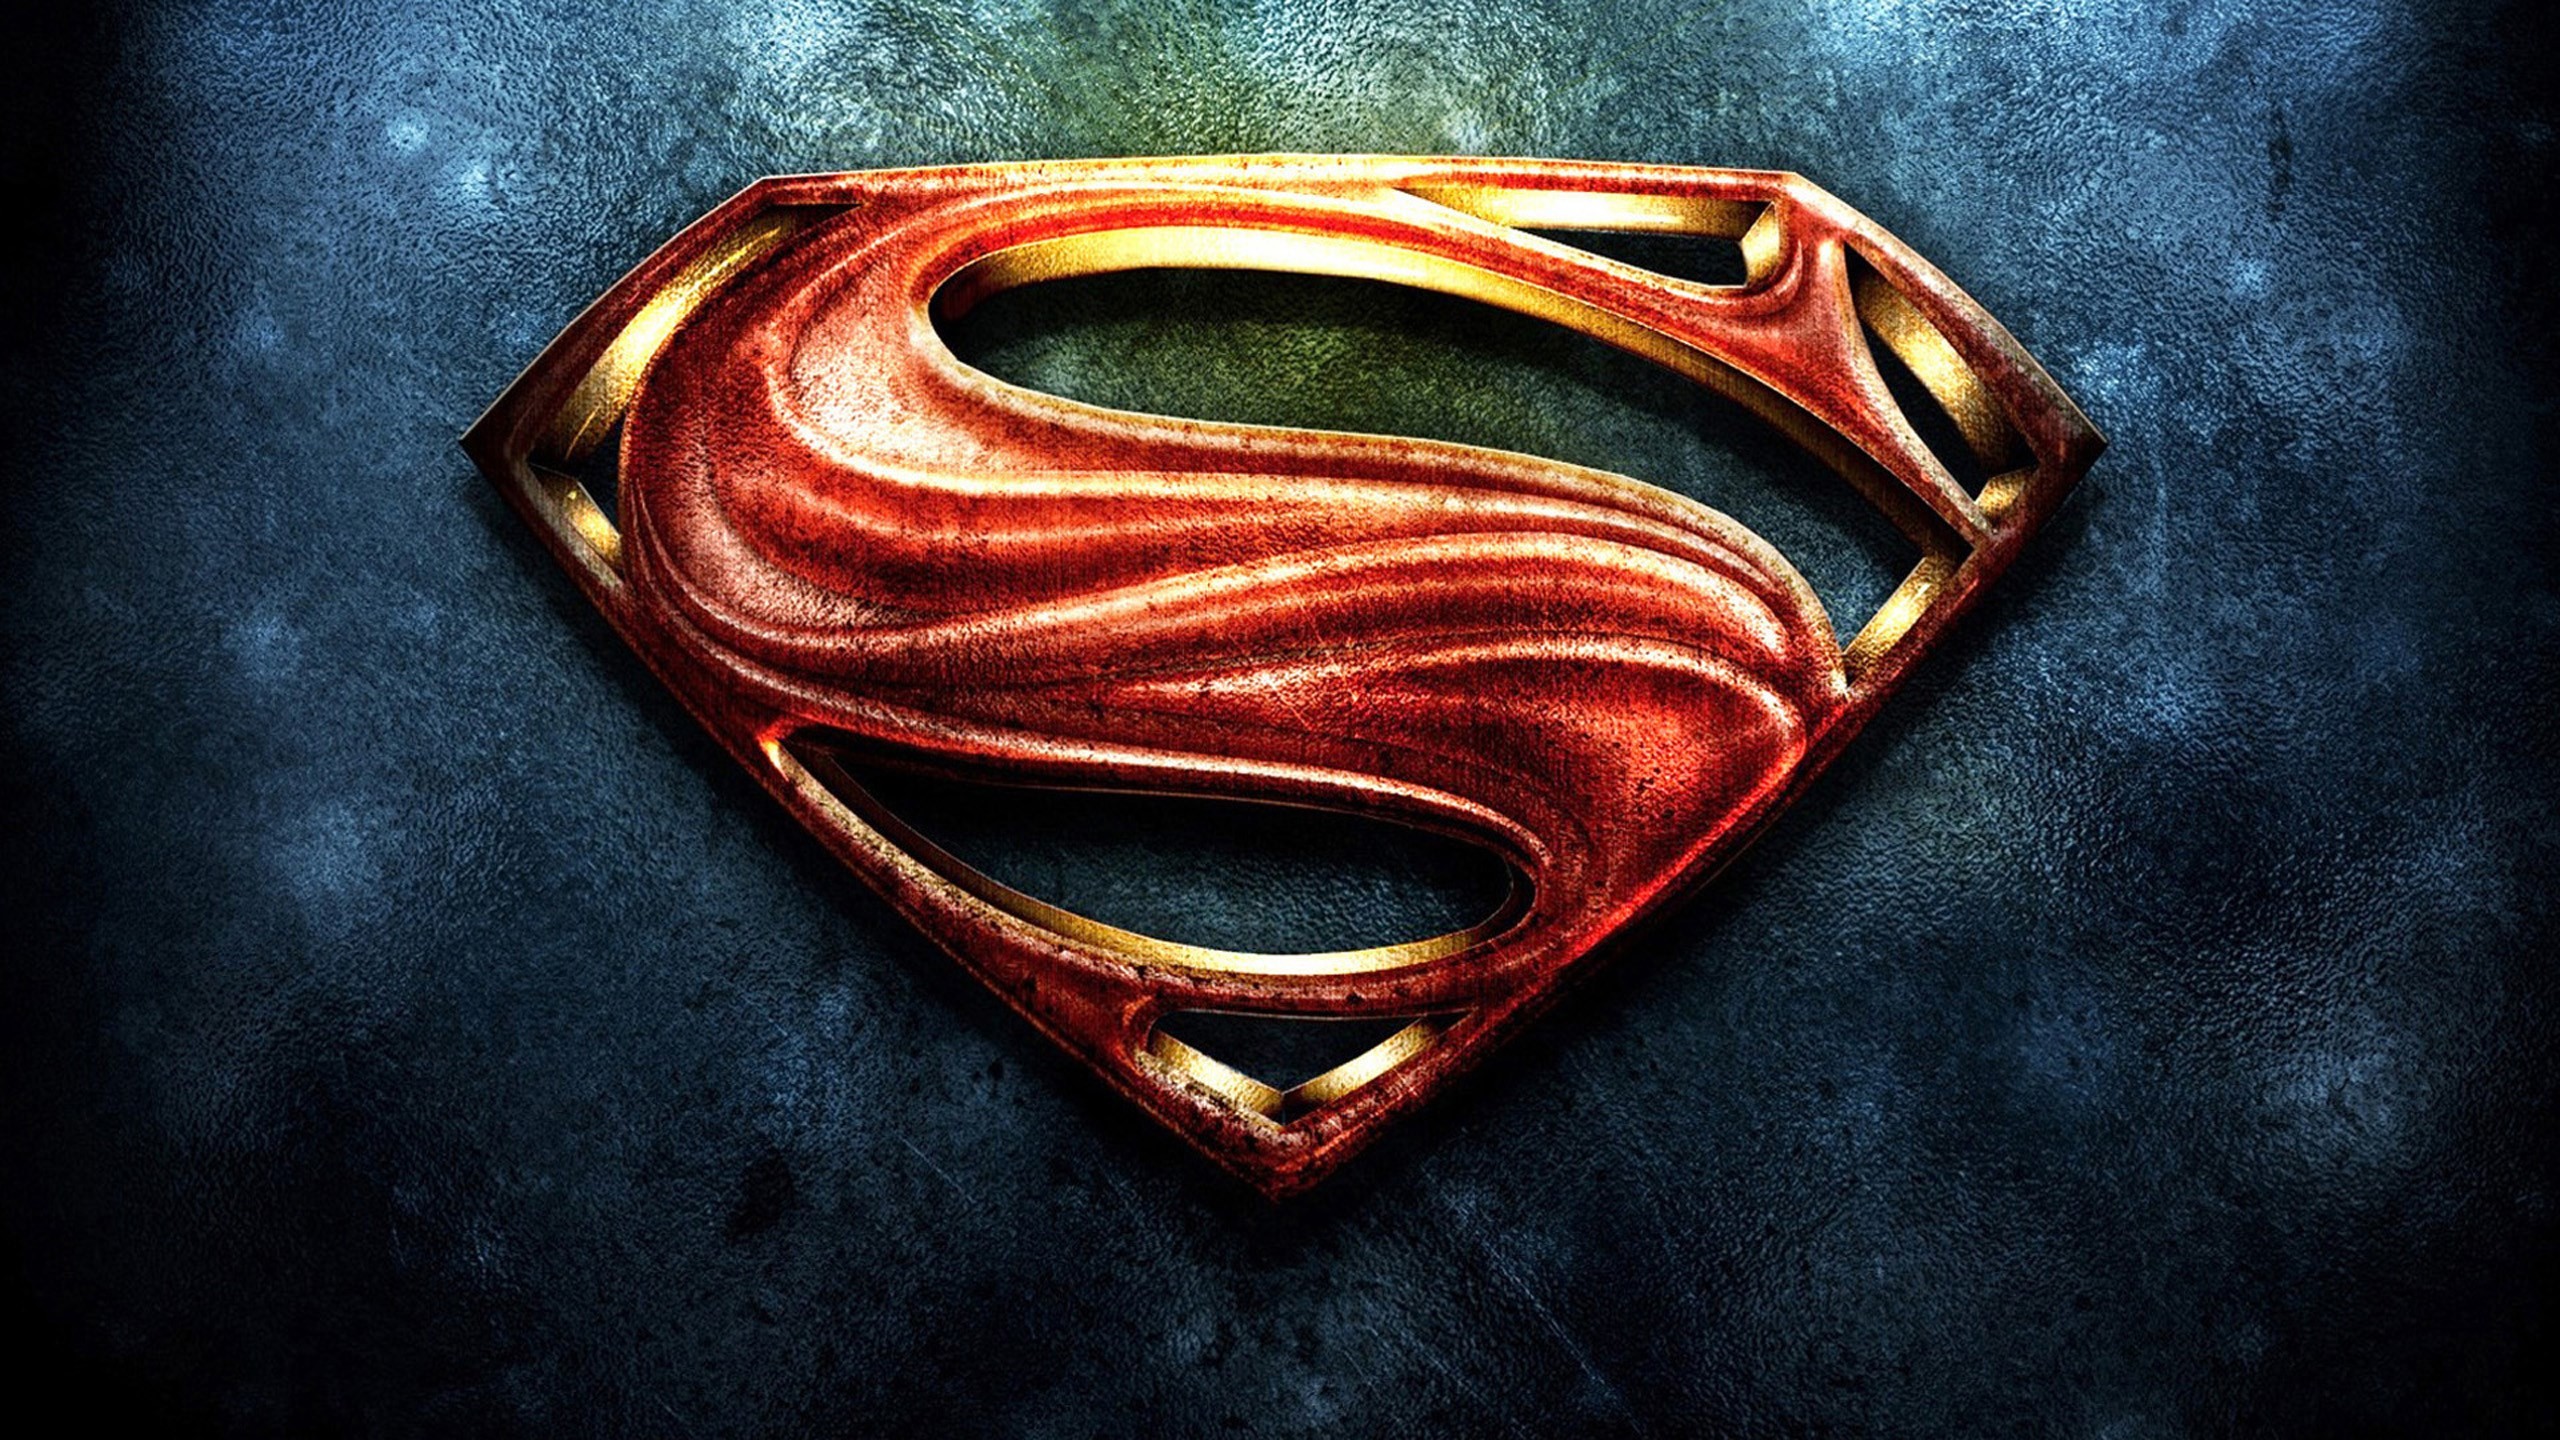 2560x1440 superman logo ipad wallpaper free download